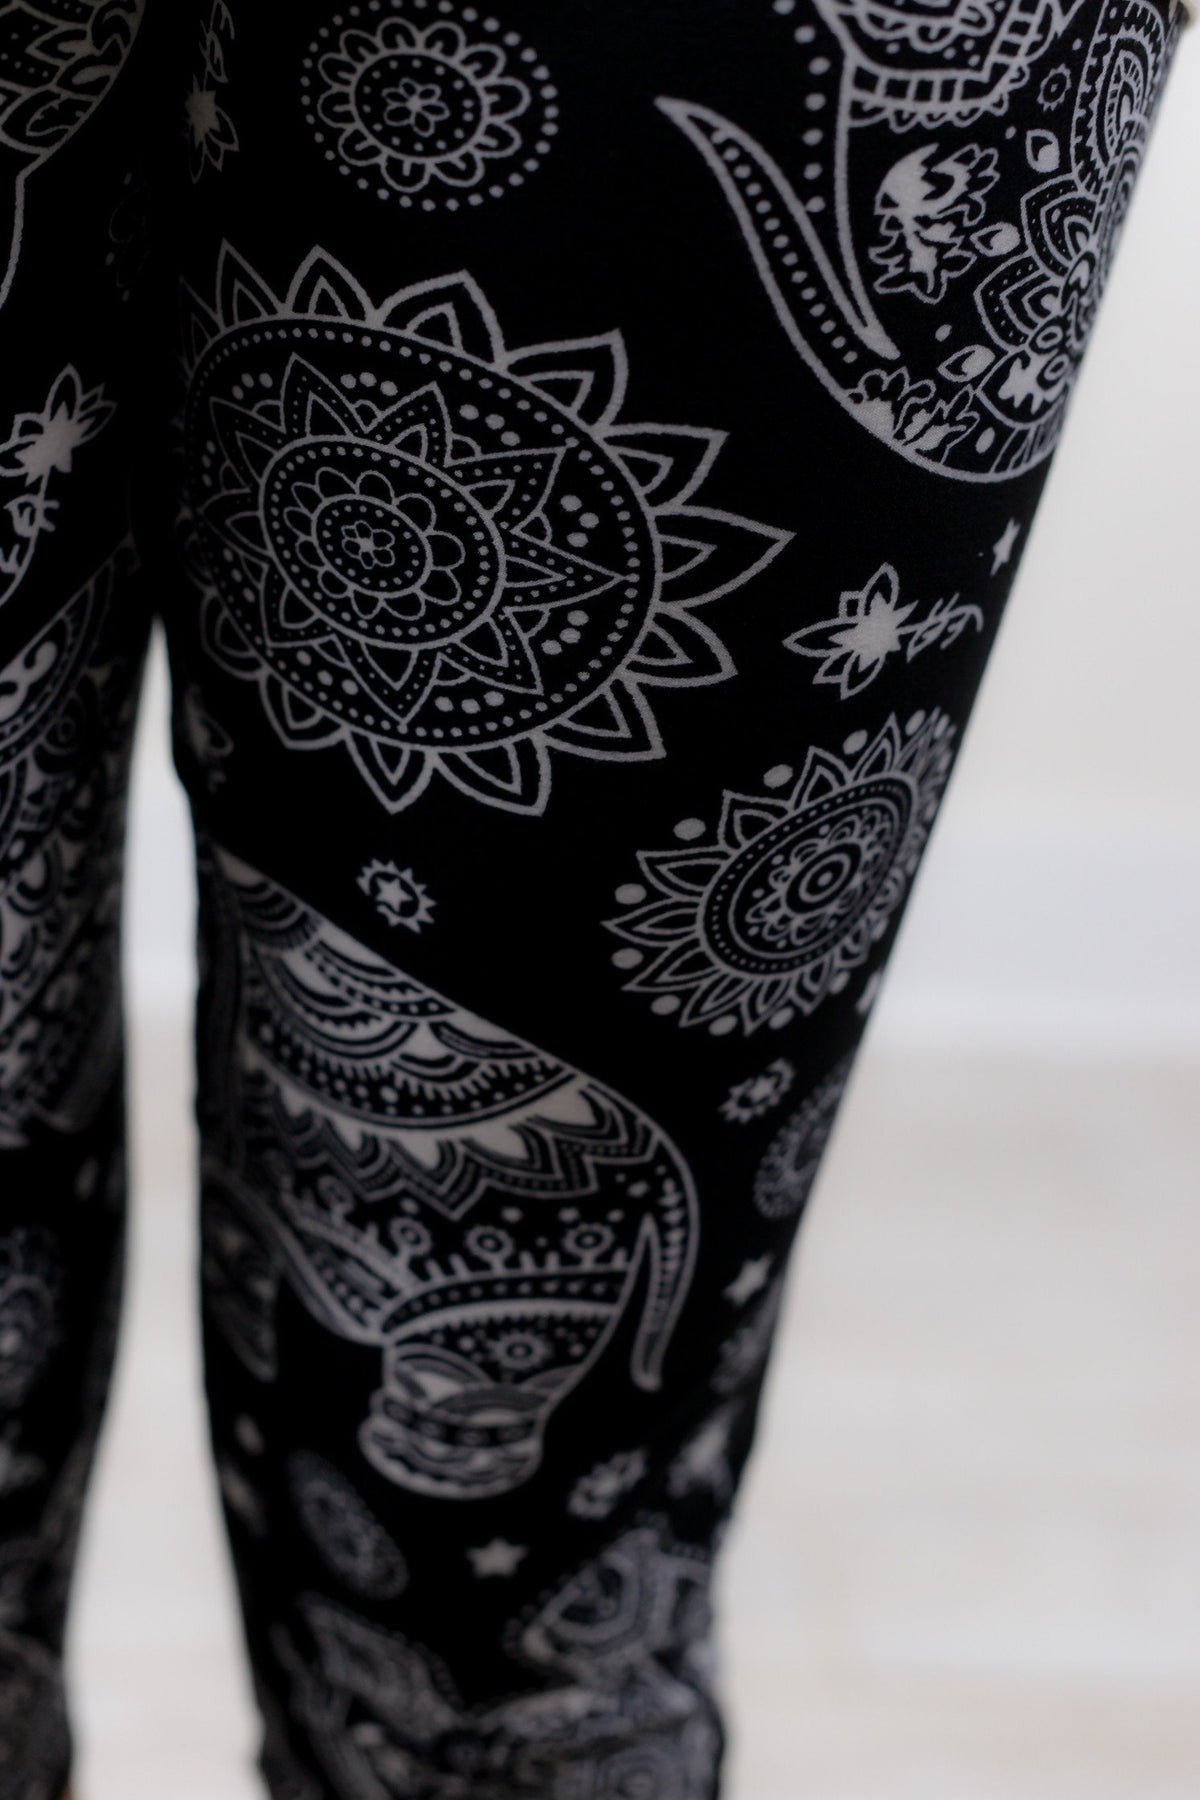 Black/White Capri Elephant Printed Leggings (Sizes 4-12) - LEG1141BW-Tee for the Soul